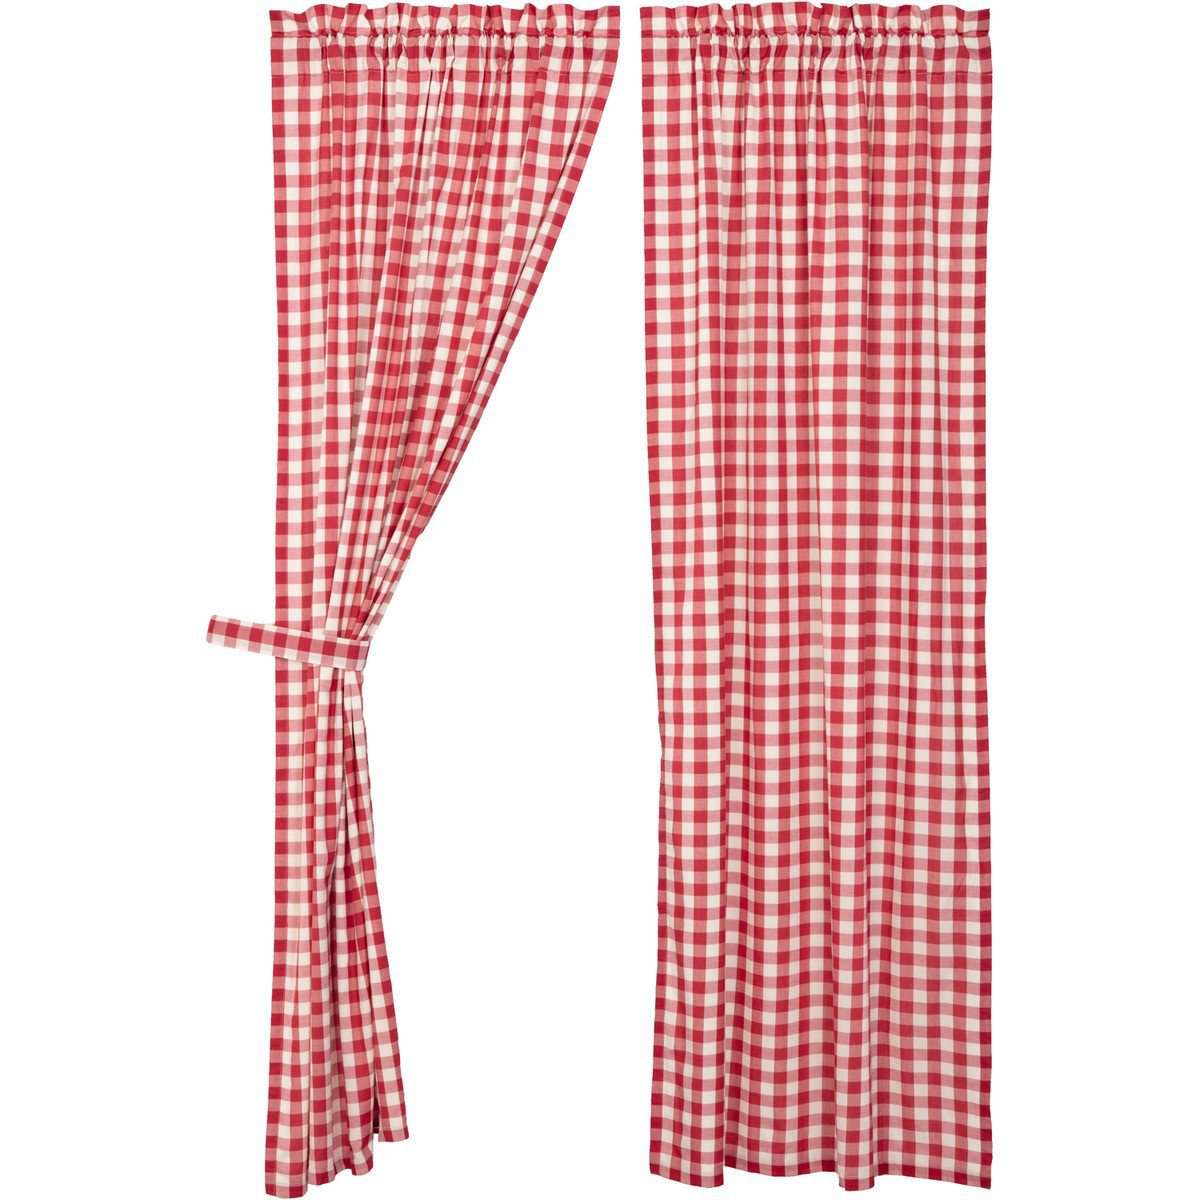 Annie Buffalo Black/Grey/Red/Tan Check Panel Curtain Set of 2 84x40 - The Fox Decor